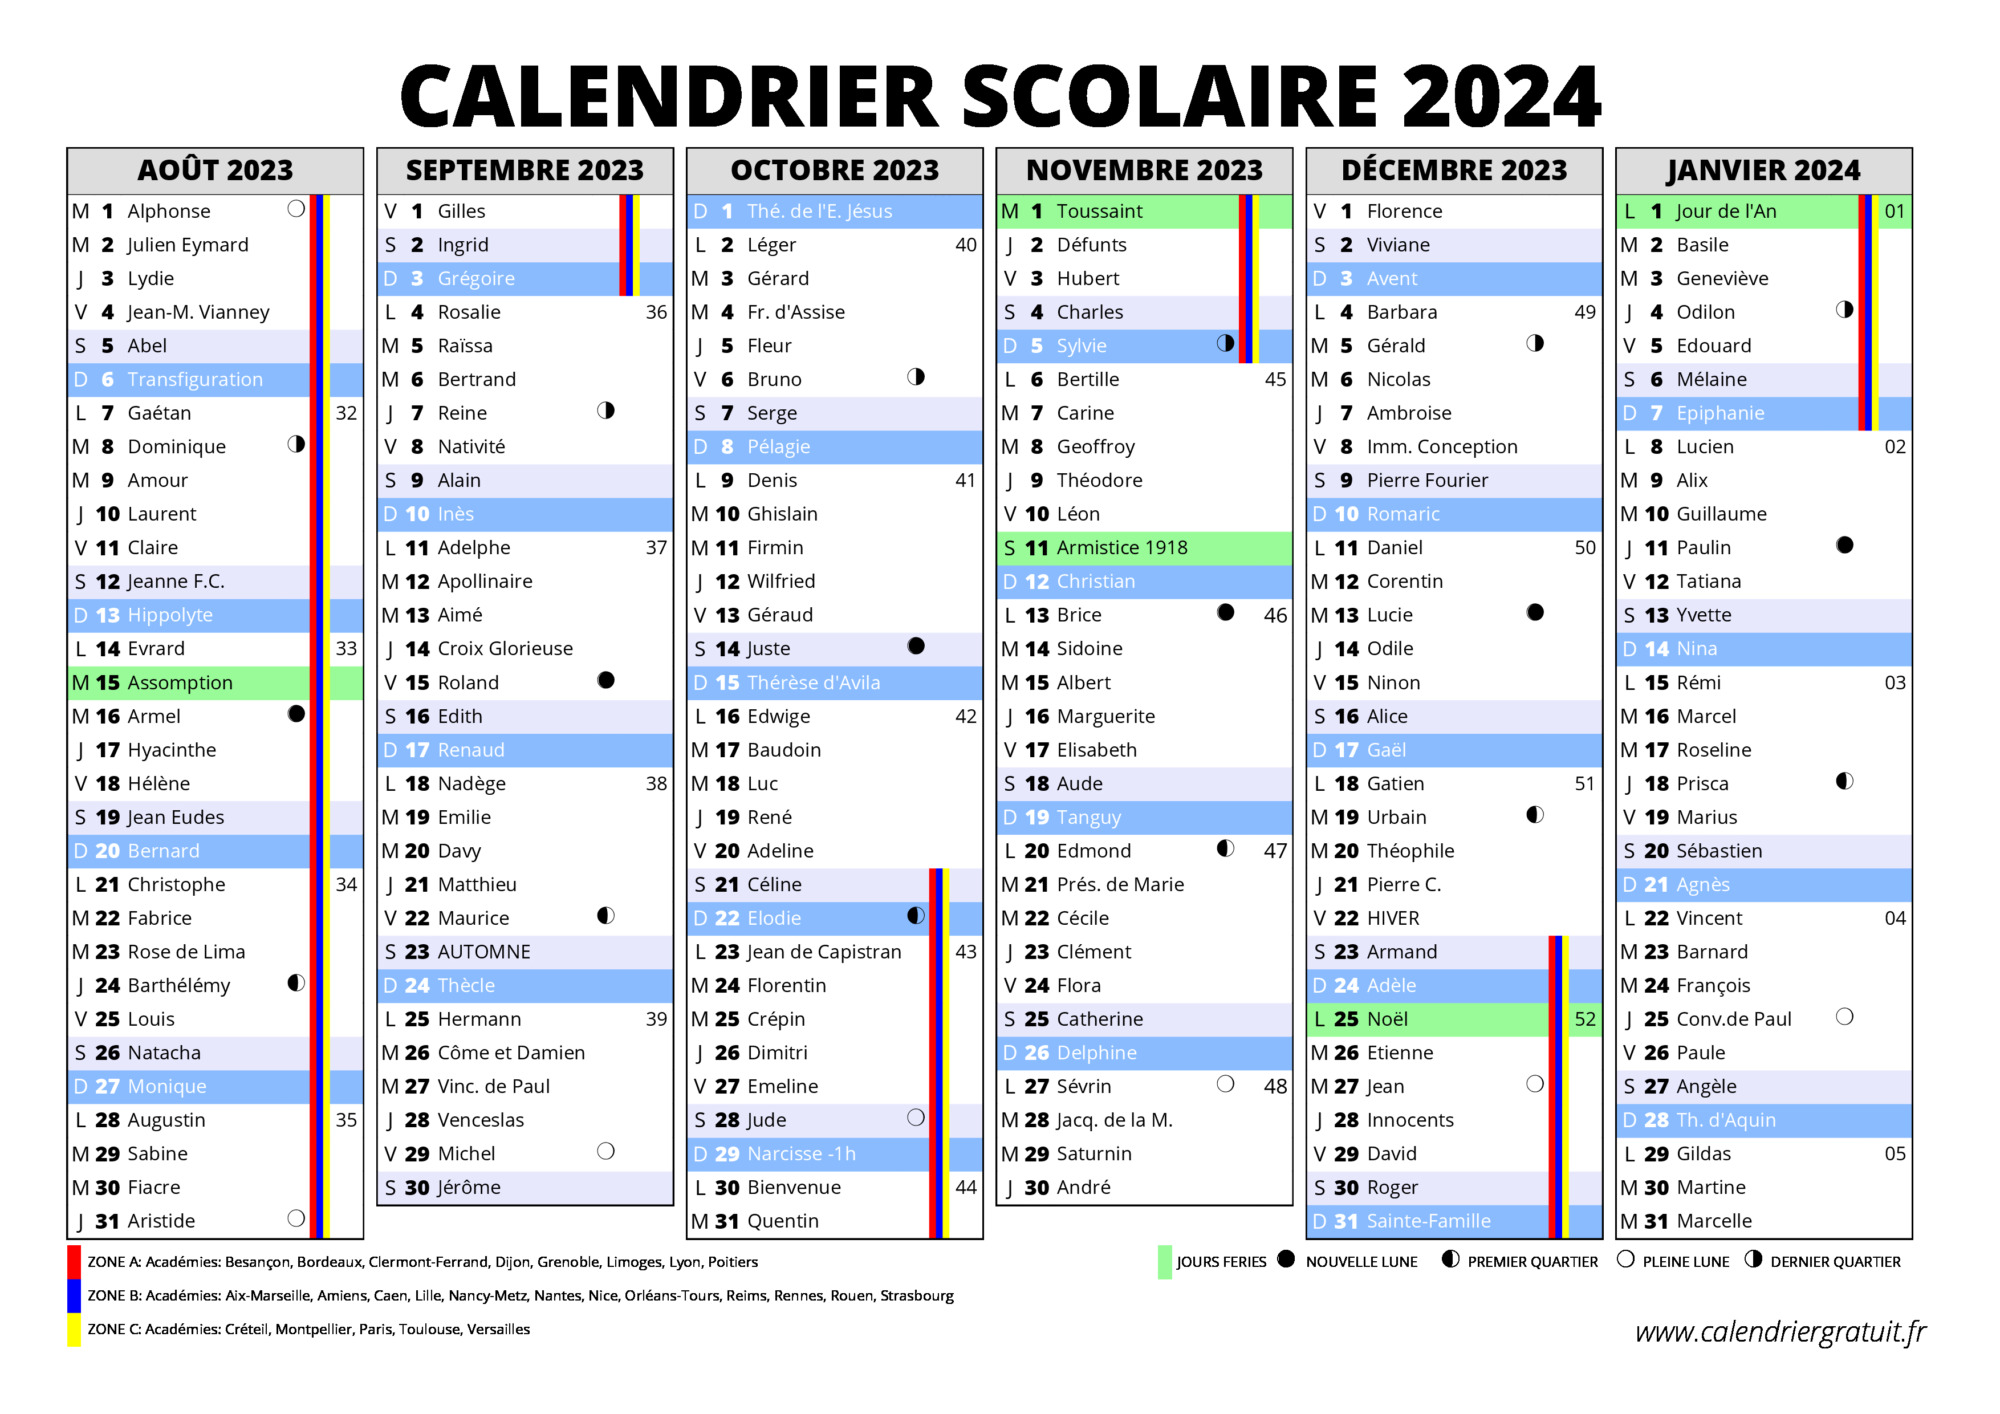 Agenda 2024 1er Semestre: Du 01 janvier 2024 à 30 Juin 2024